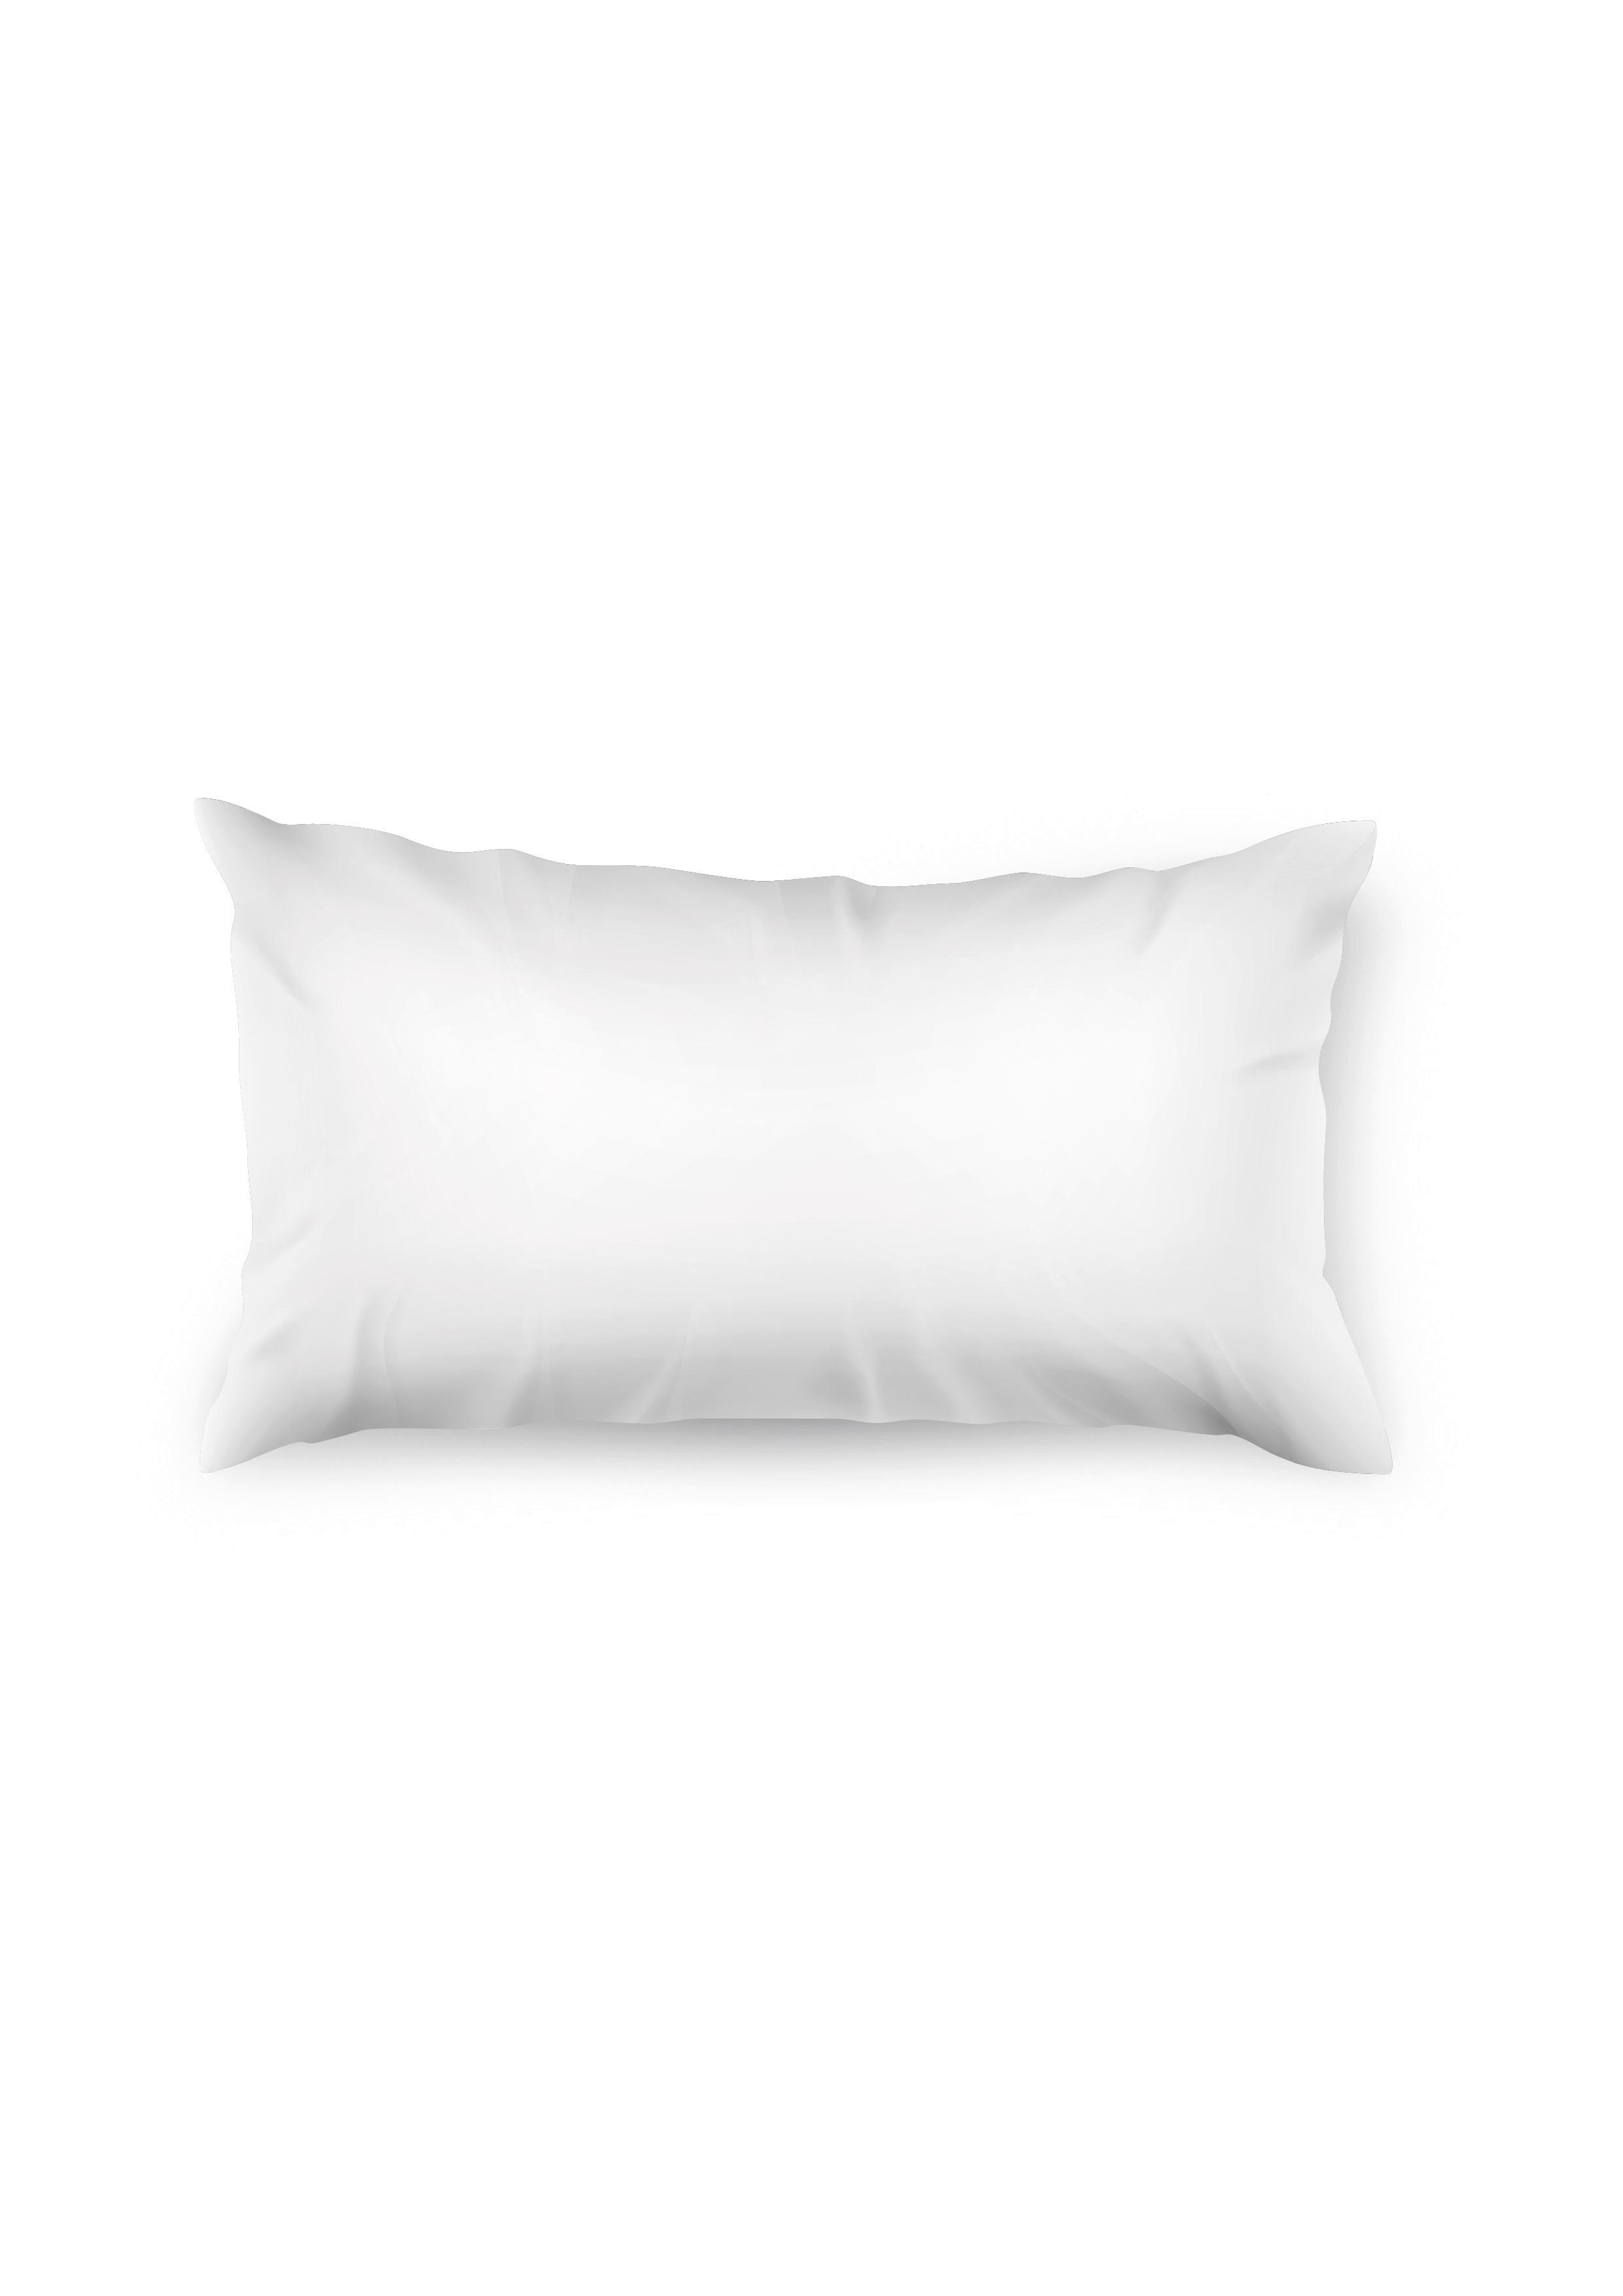 Jastučnica 40/80 Cm Annika - bijela, tekstil (40/80cm) - Modern Living